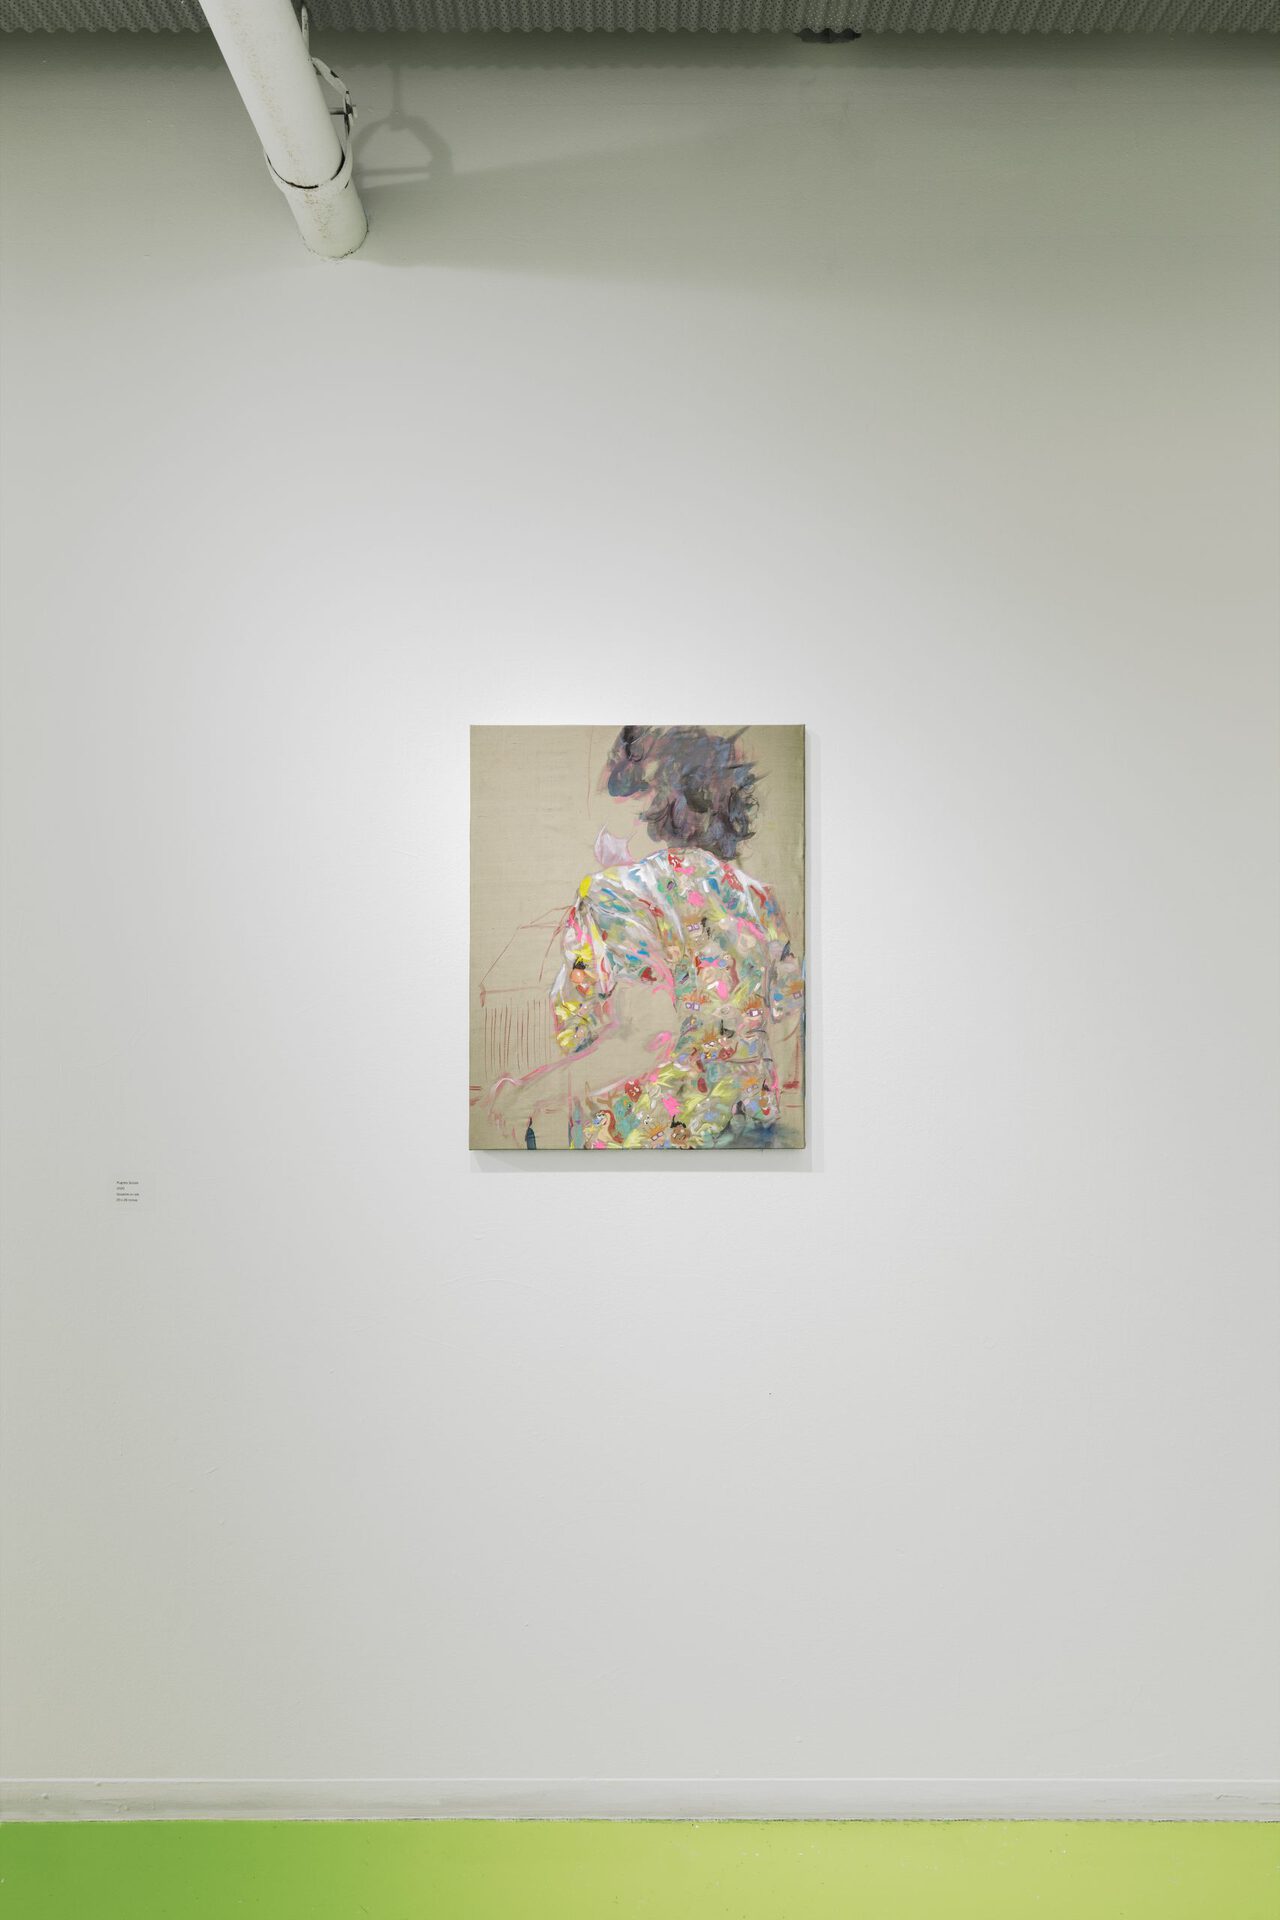 Maggie Crowley, Rugrats Scrubs, 2020, gouache on silk, 16 x 20 inches